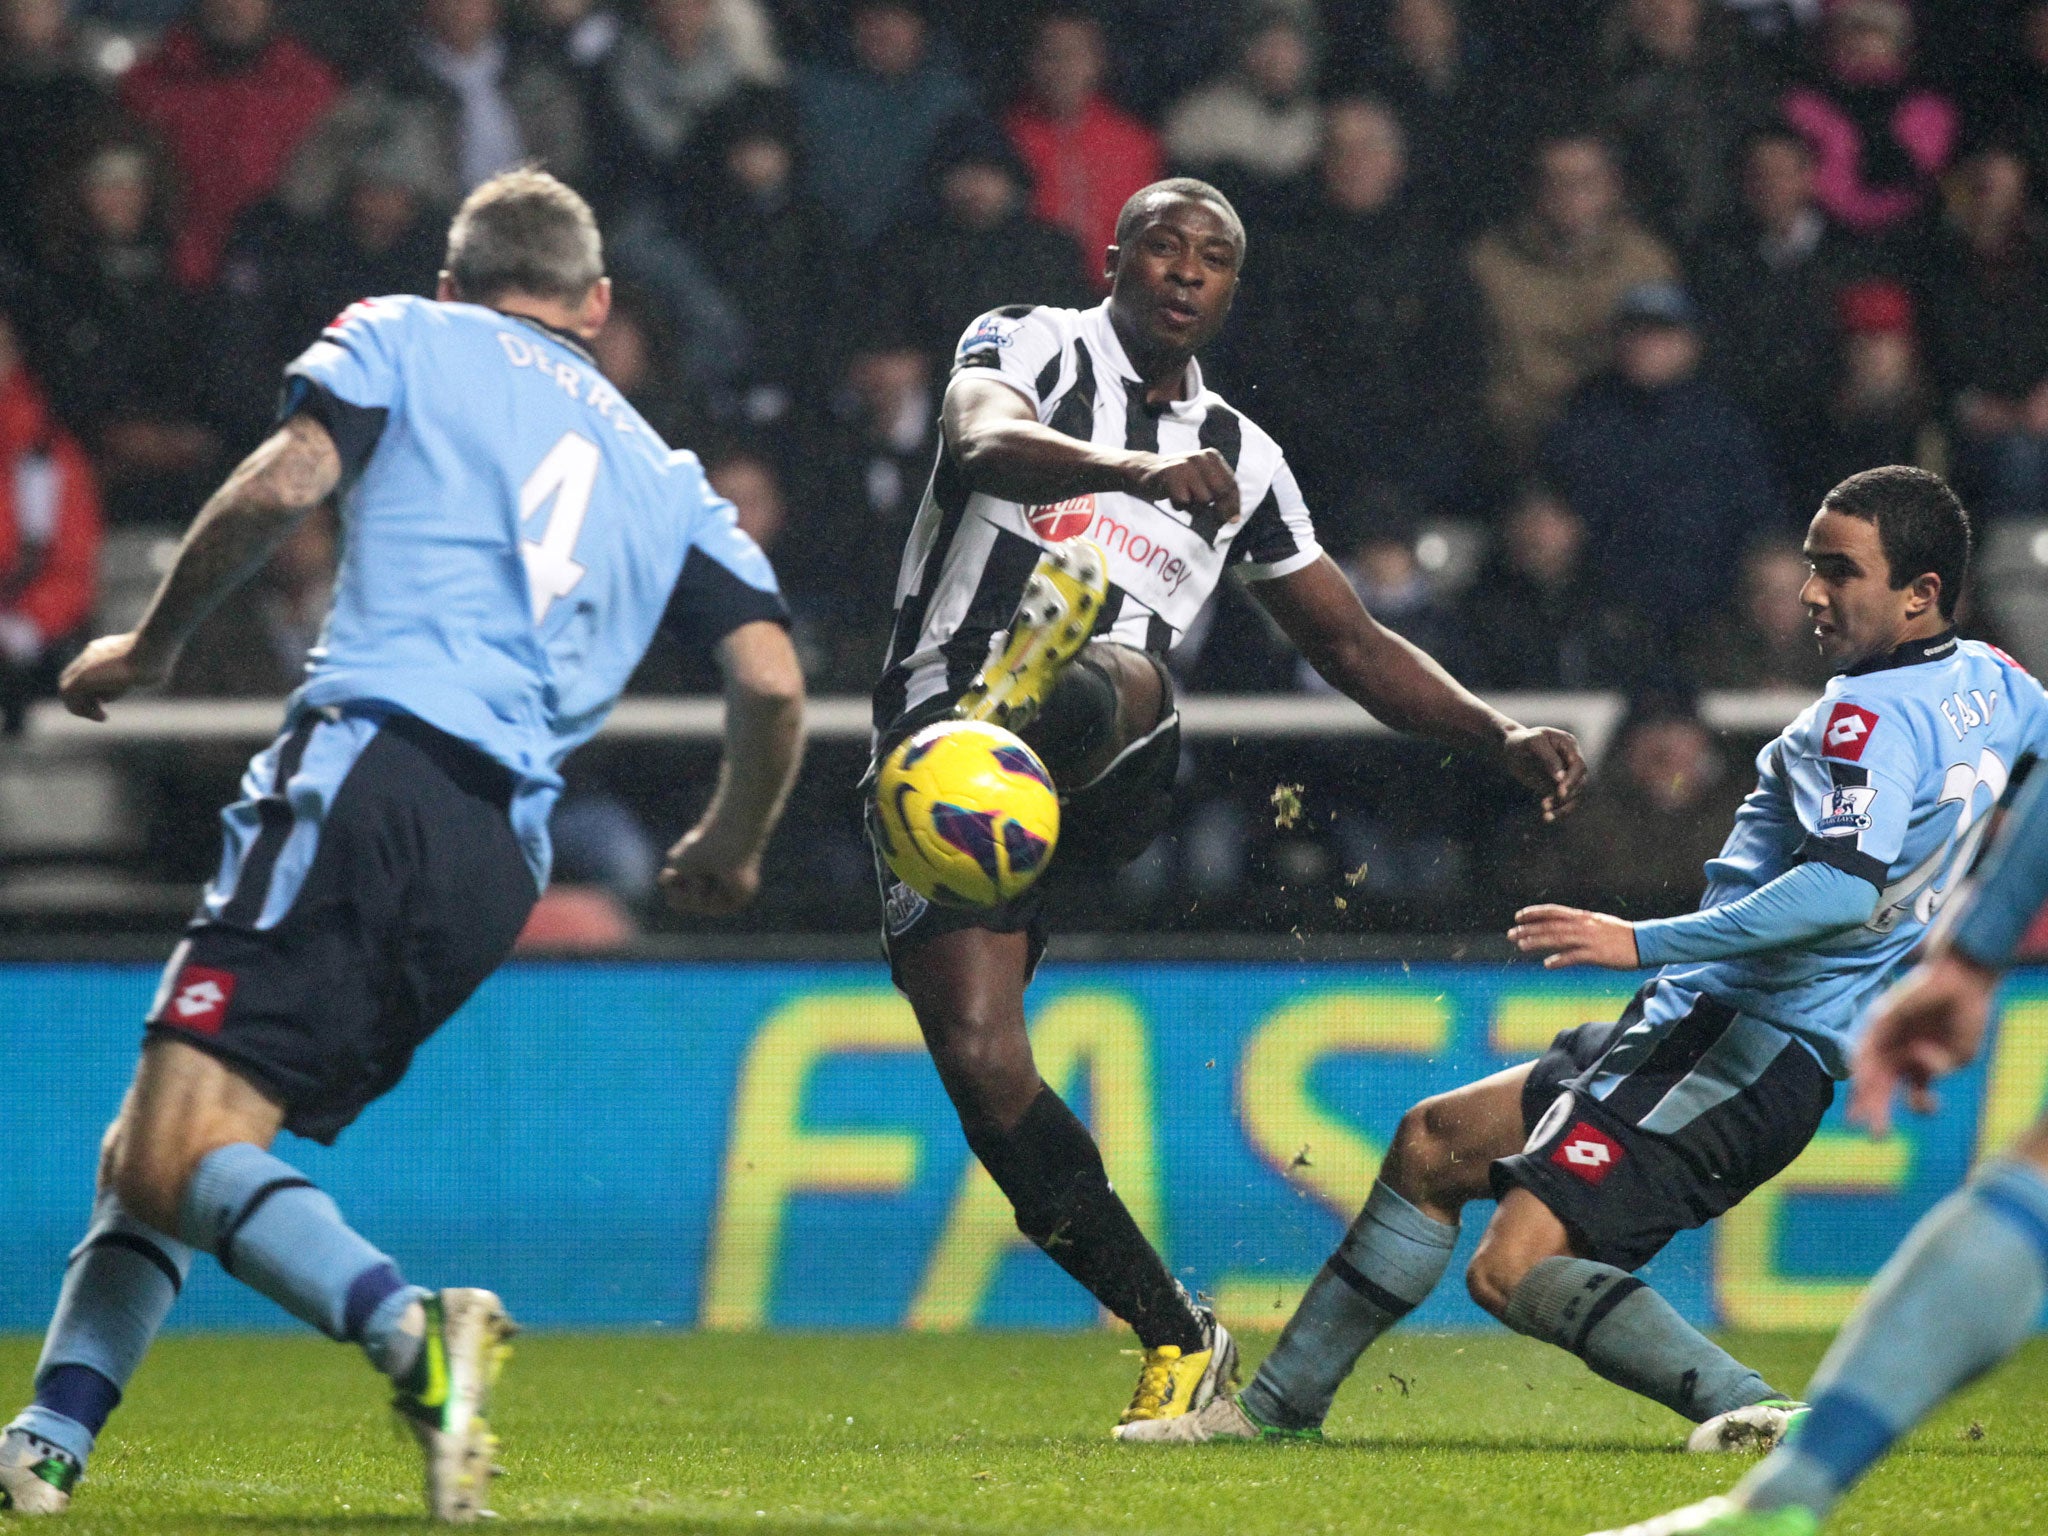 Newcastle's Nigerian striker Shola Ameobi (2nd L) scores the winning goal